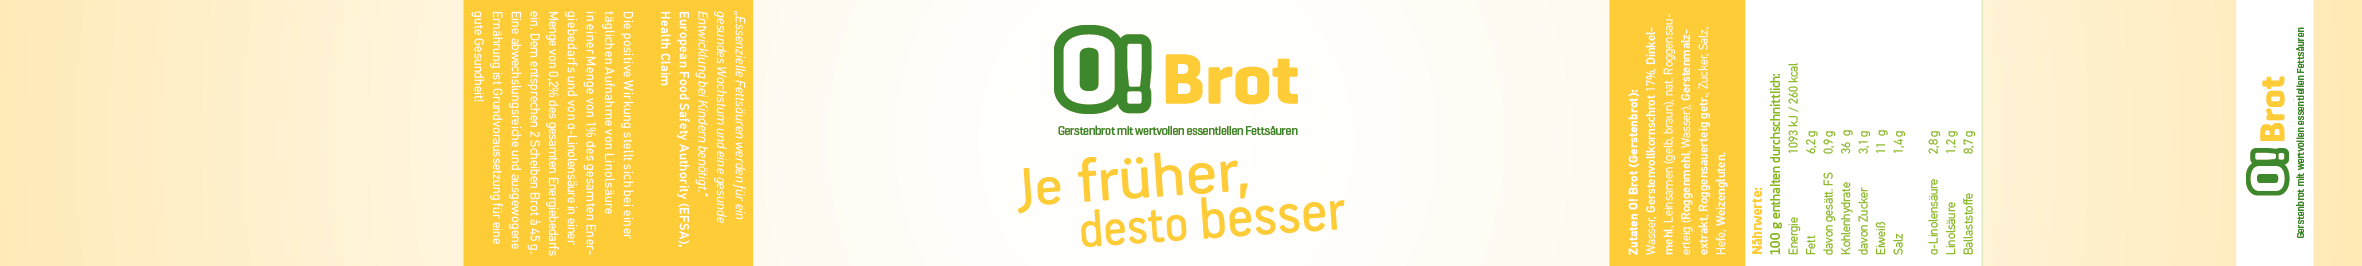 Uldo-O-Brot-Banderole2